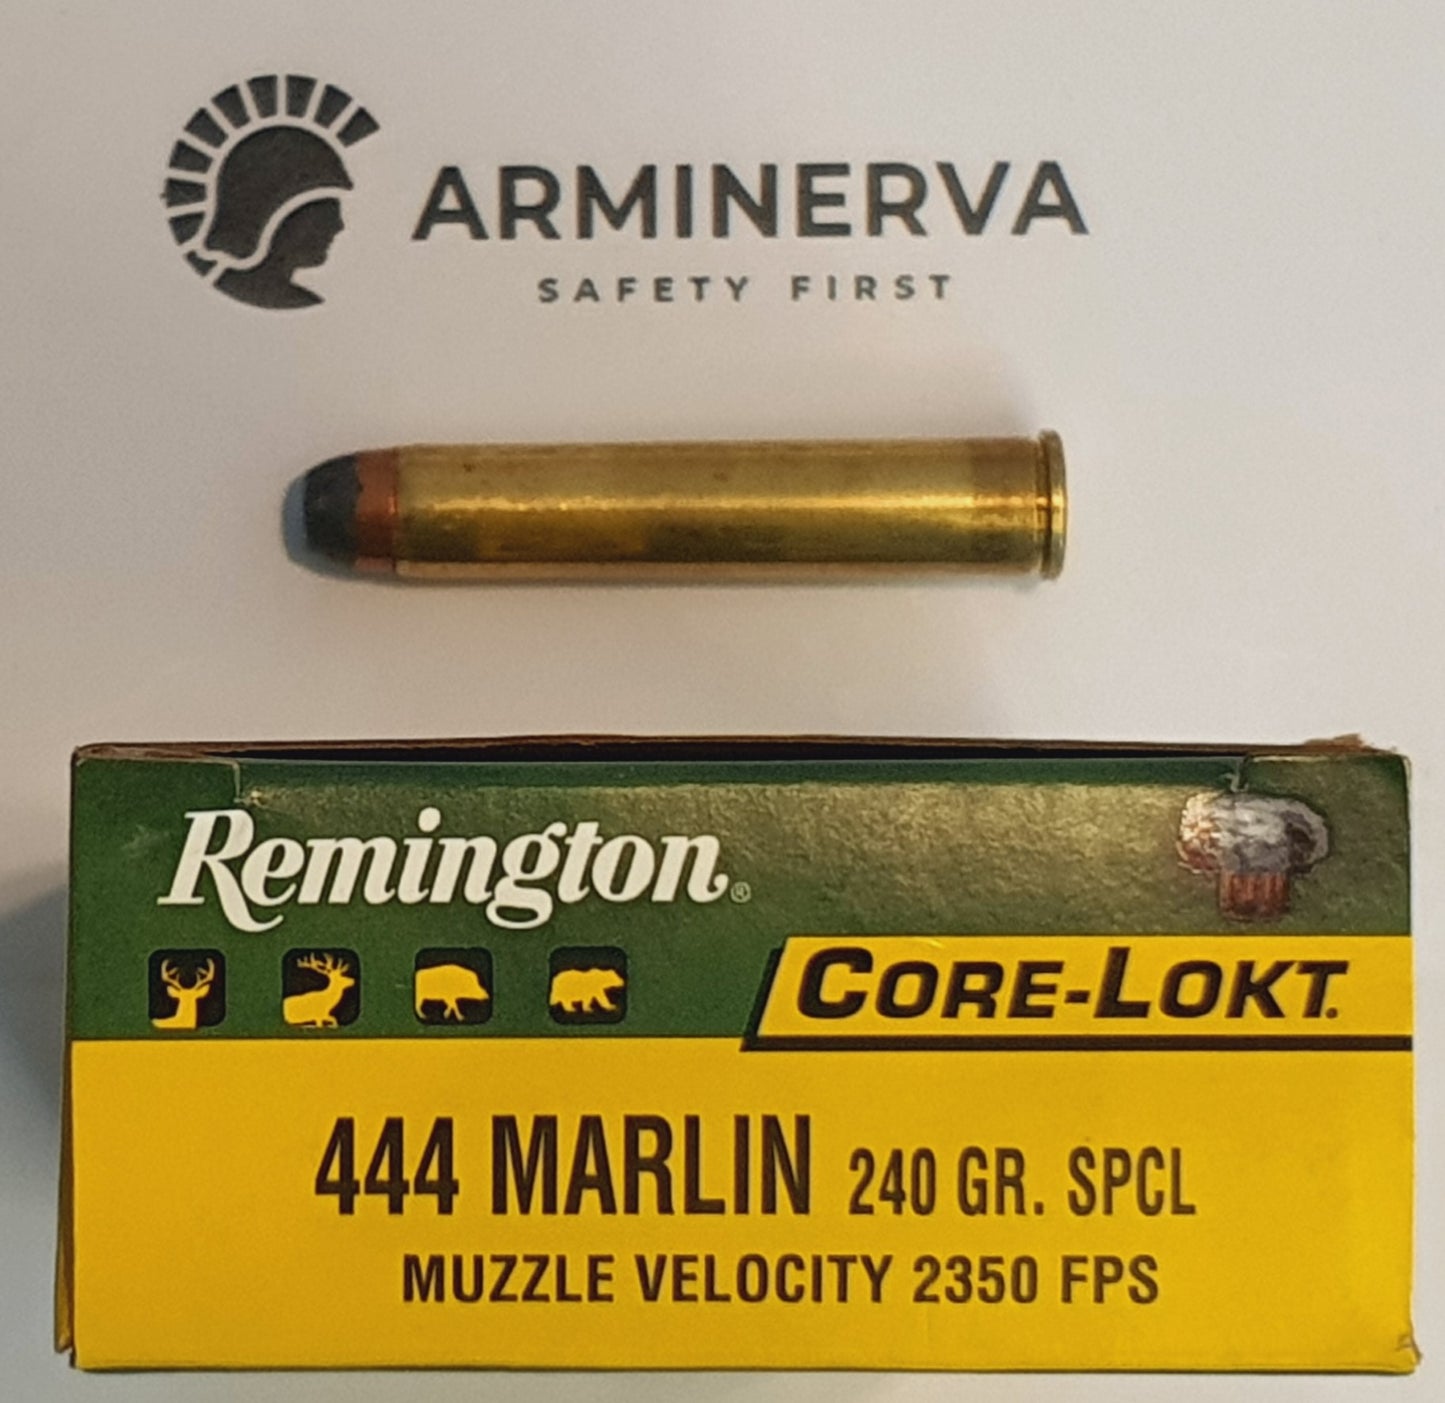 Remington 444 Marlin Core-Lokt SP 240grs.